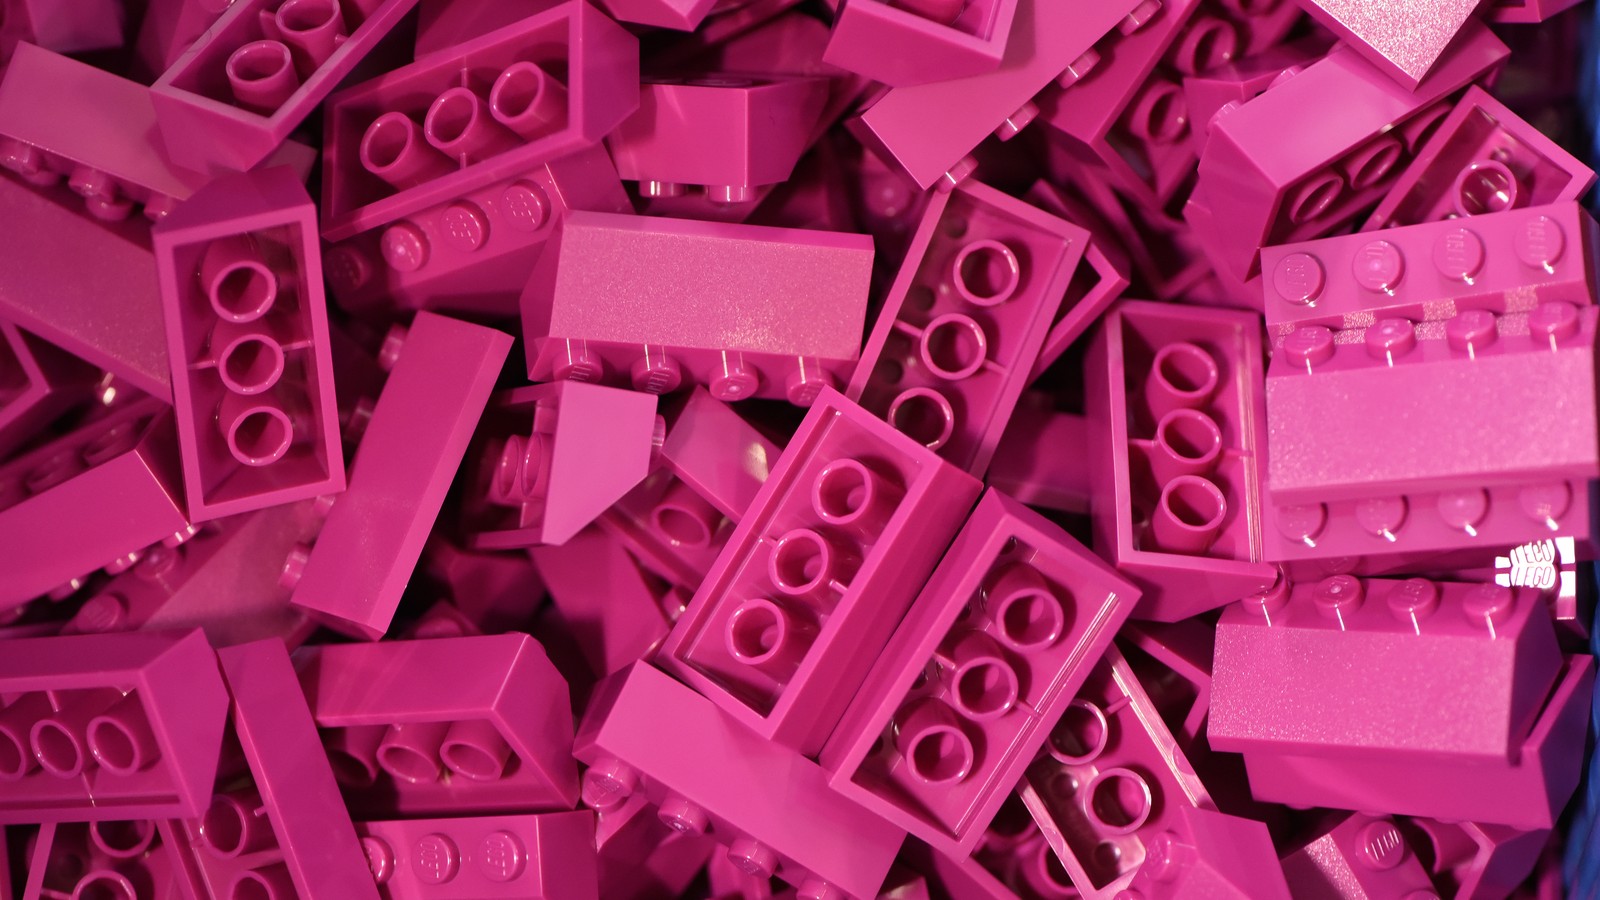 YOU CHOOSE: Lego Barbie Sets